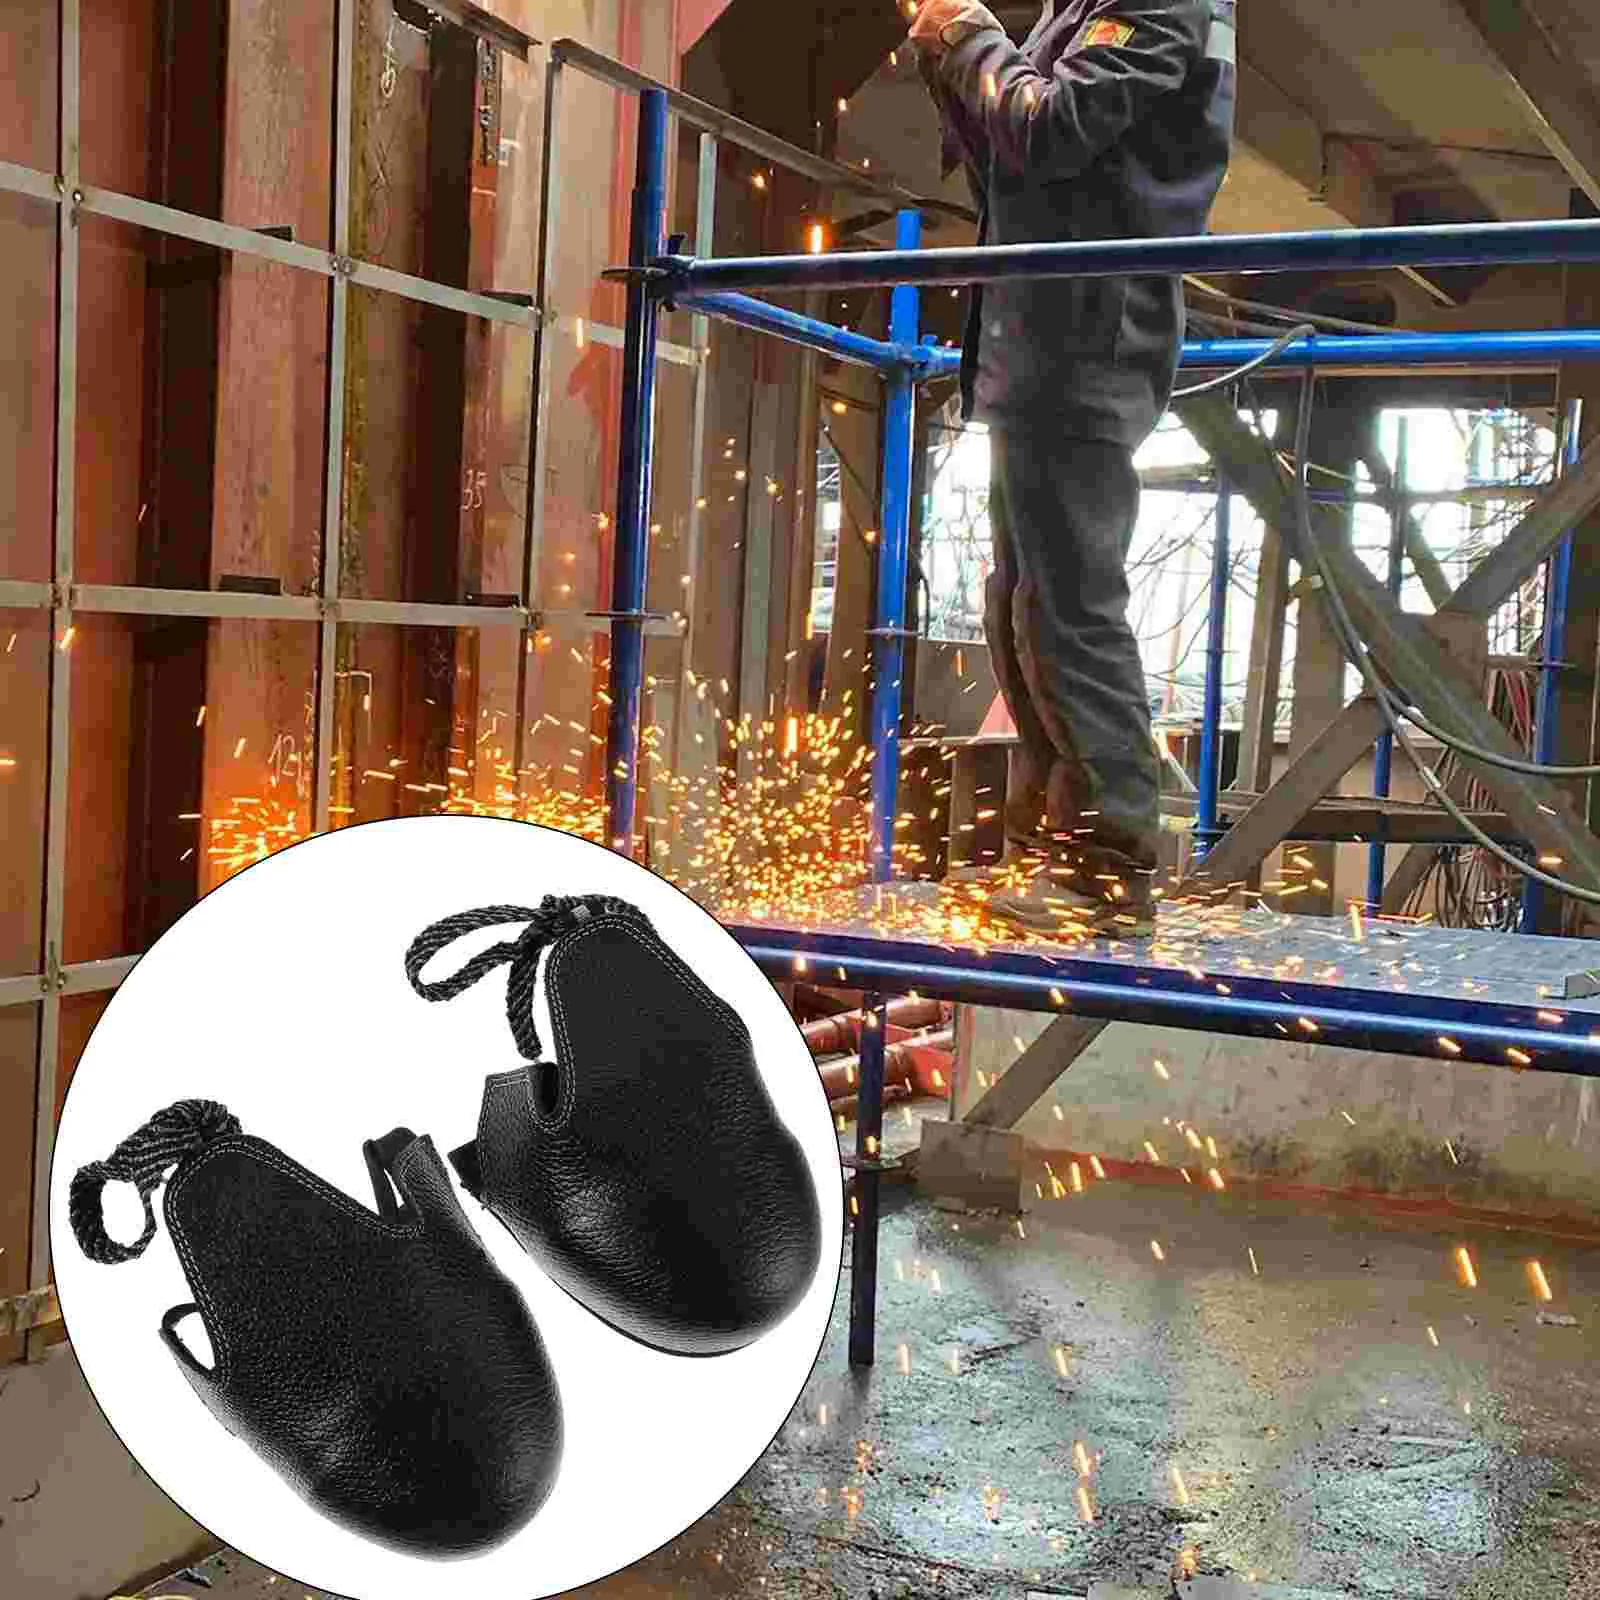 

Shoe Covers Steel Toe Covers Universal Waterproof Protective Case Worker Safety OverShoe Covers Cap Men Women Unisex